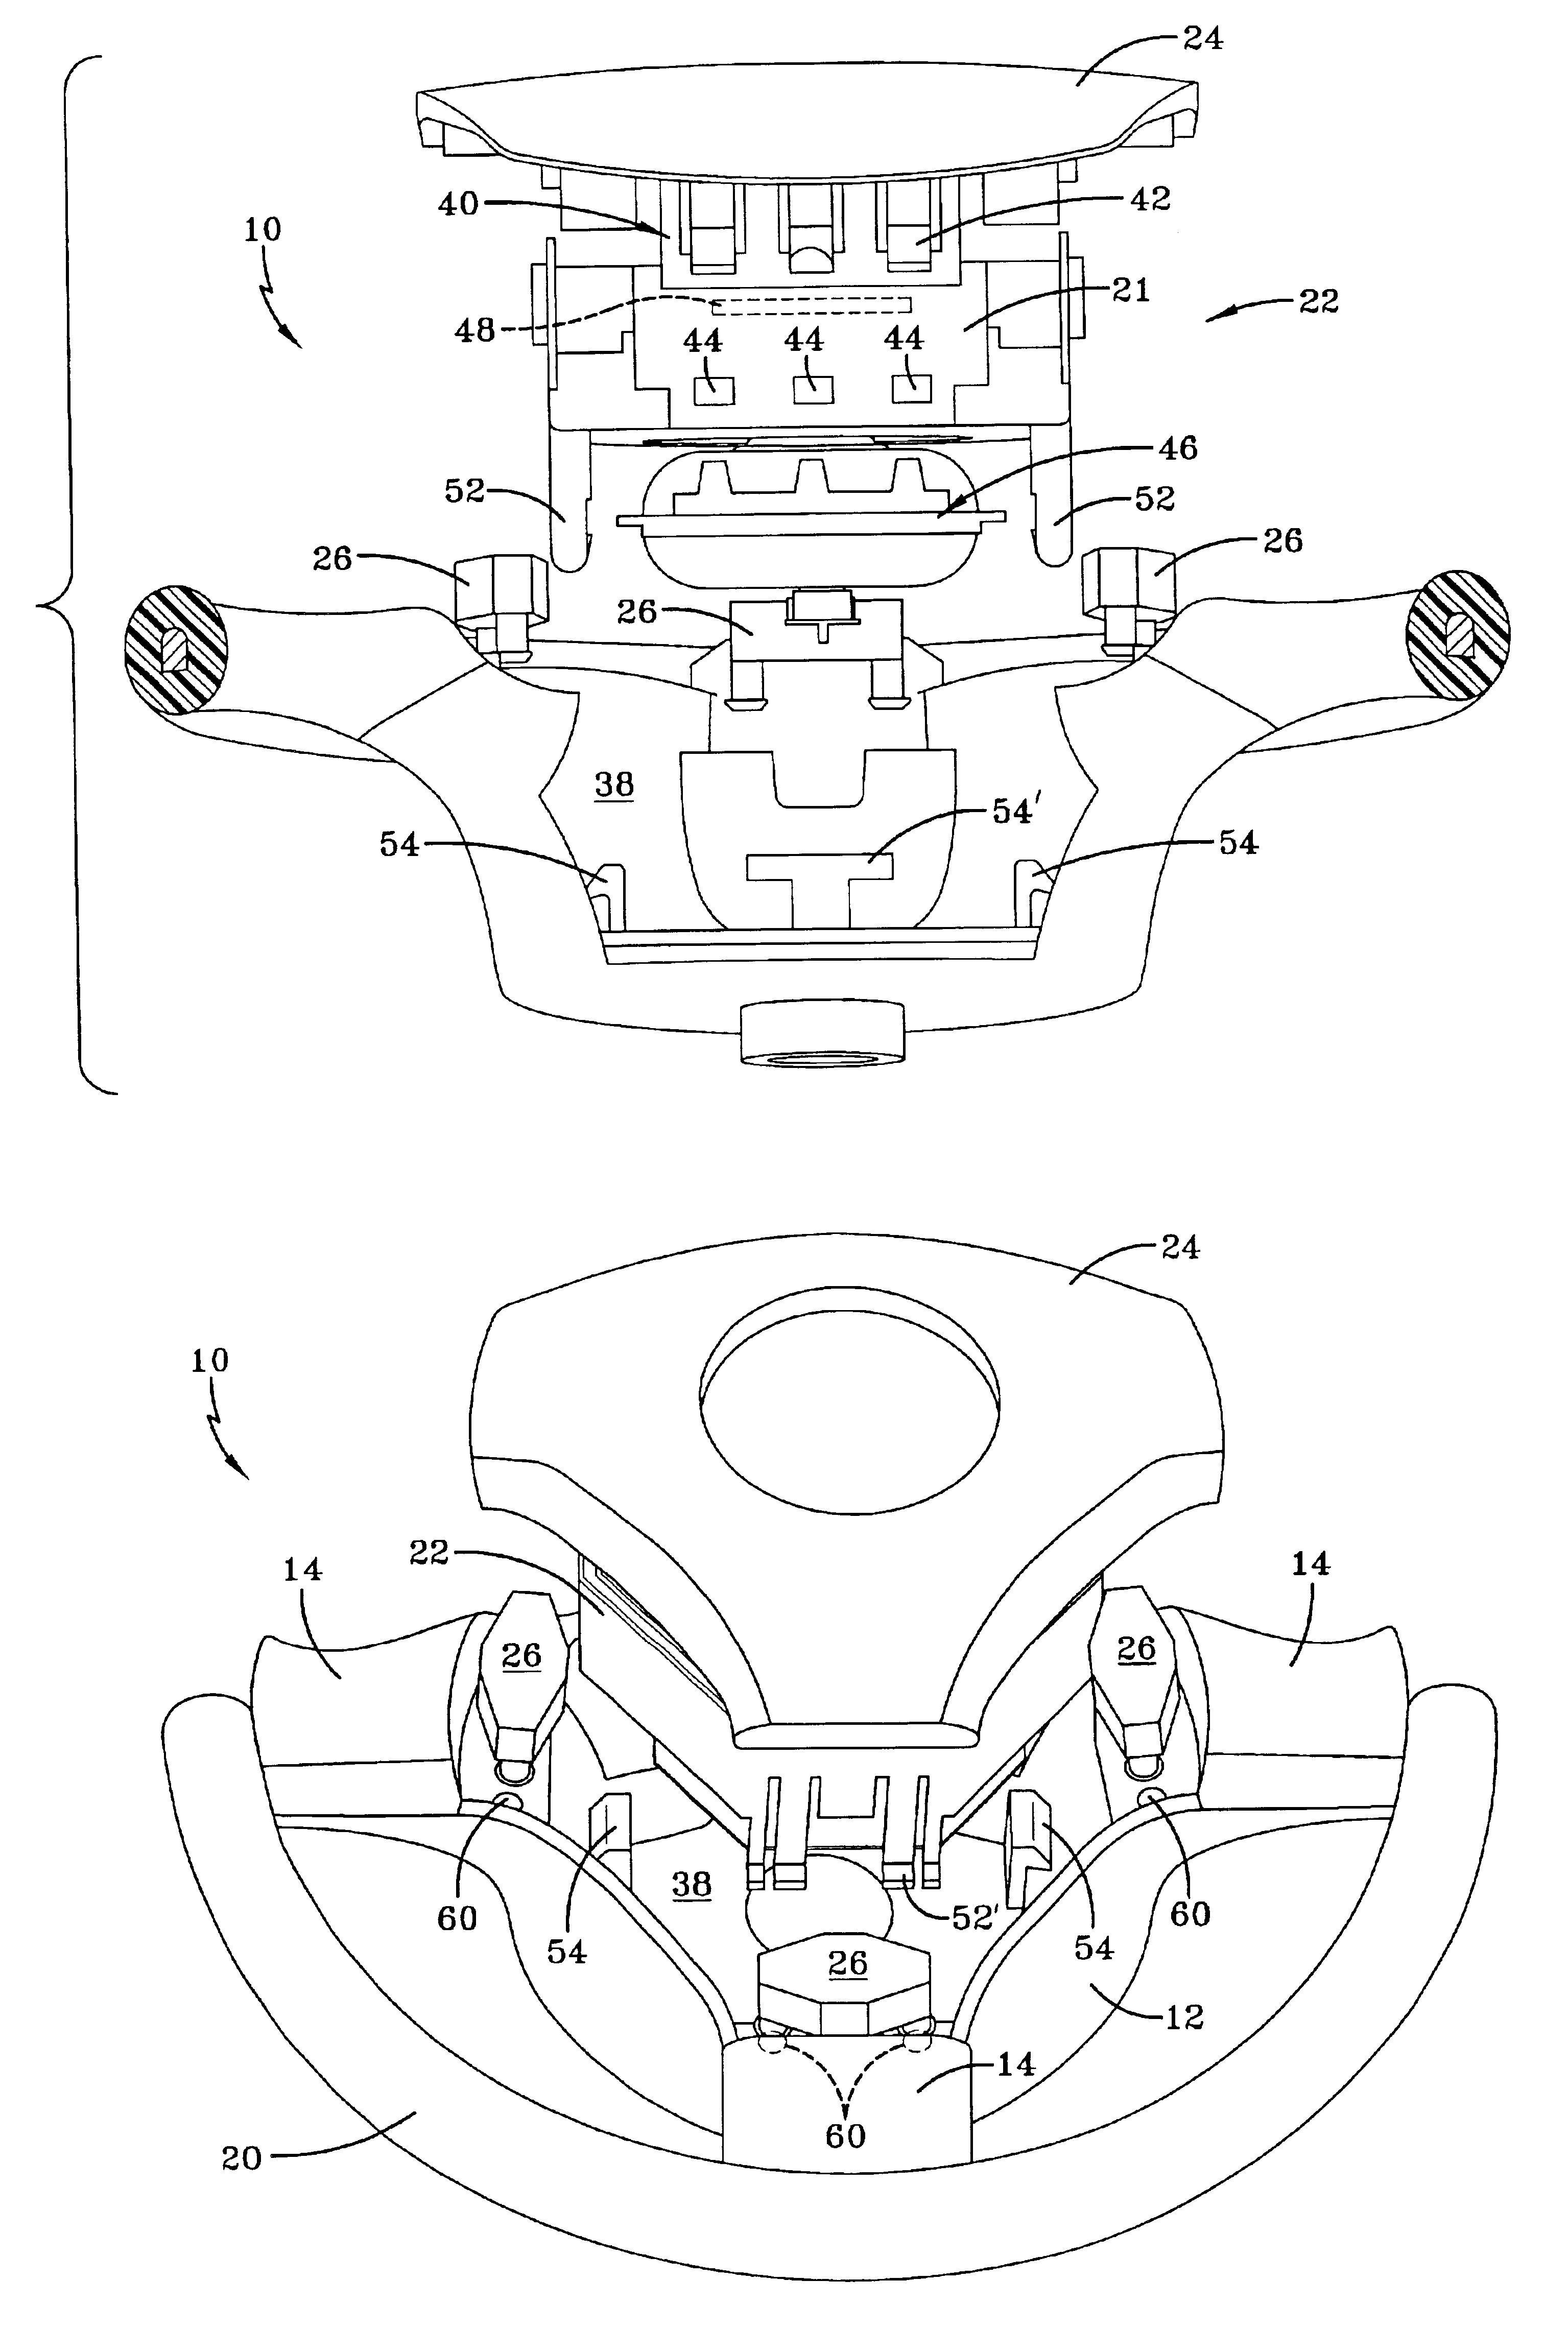 Airbag module attachment arrangement